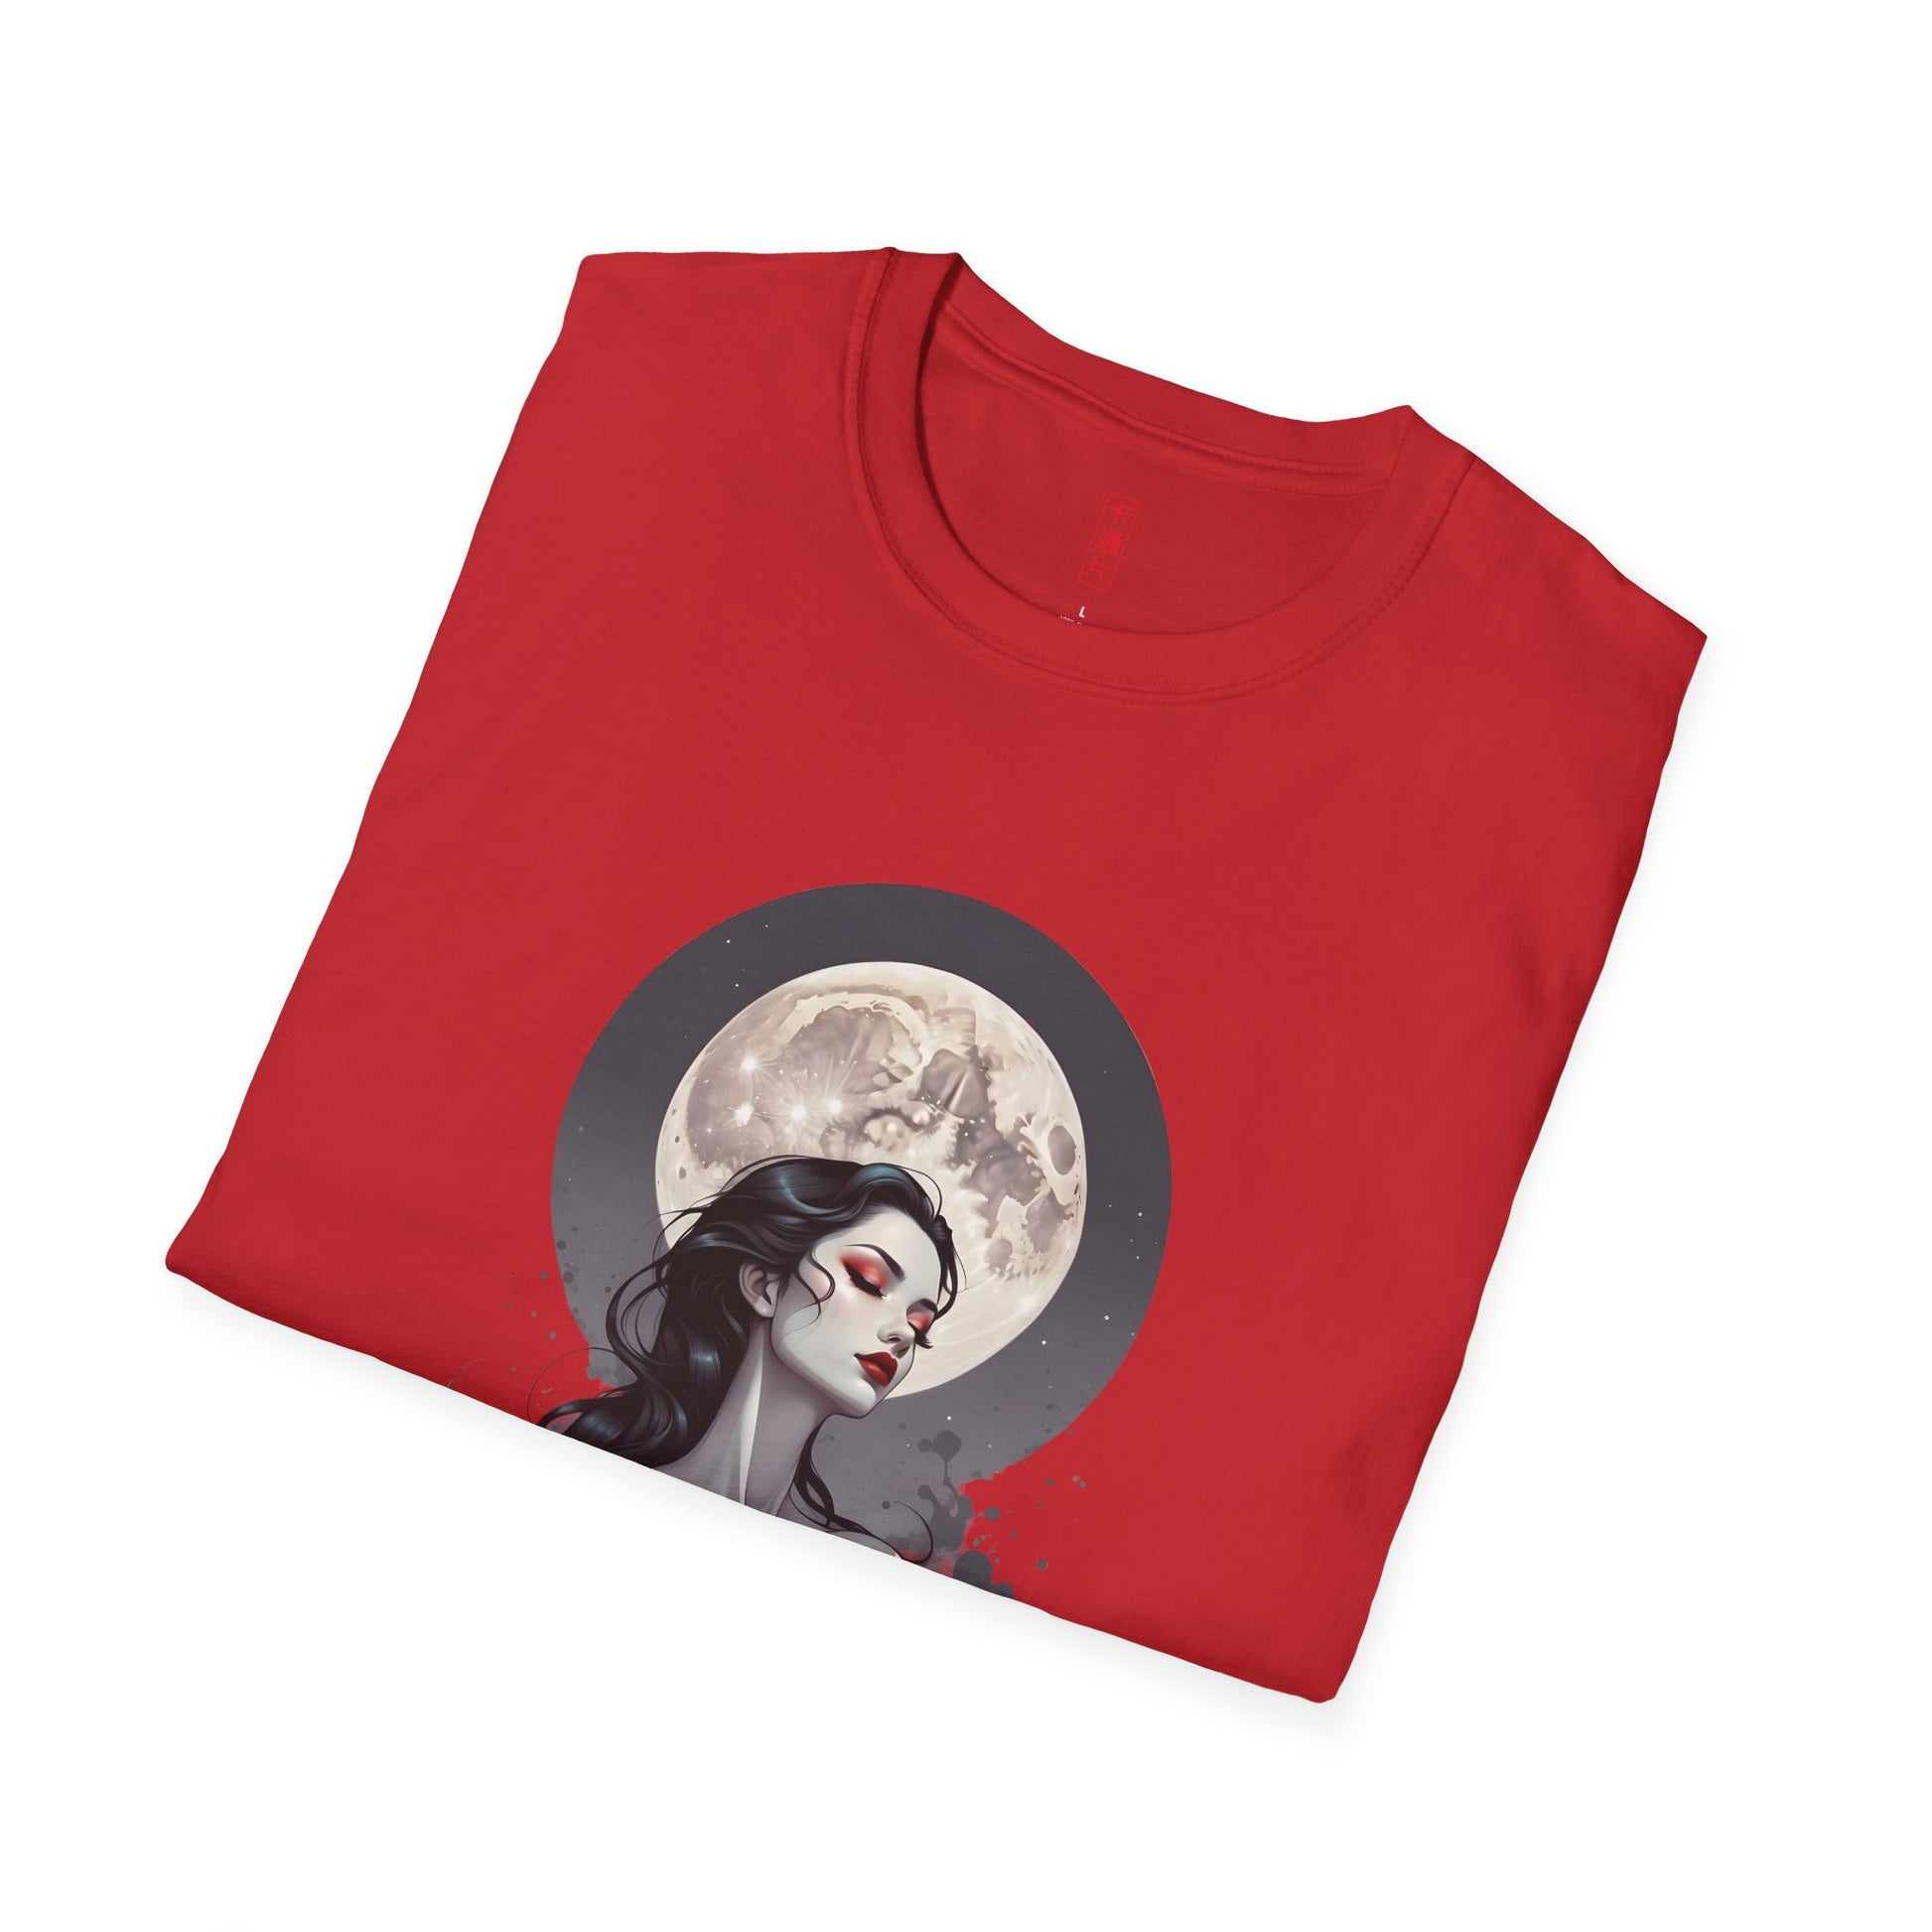 Kǎtōng Piàn - Vampires Collection - 002 - Unisex Softstyle T-Shirt Printify